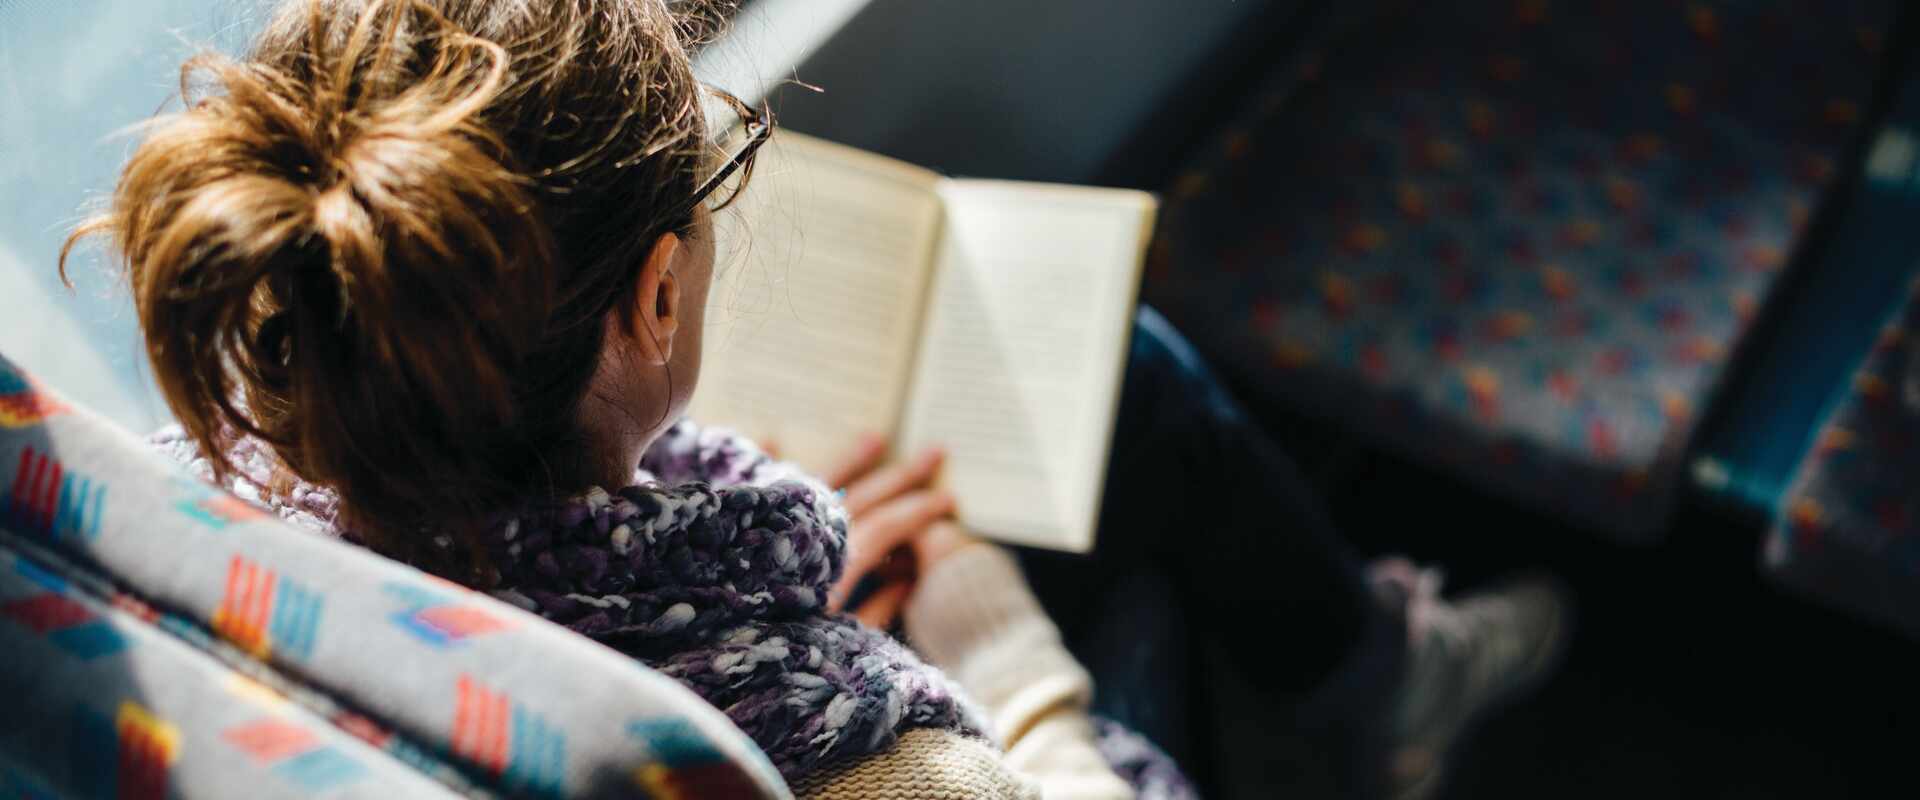 Person reading book on train